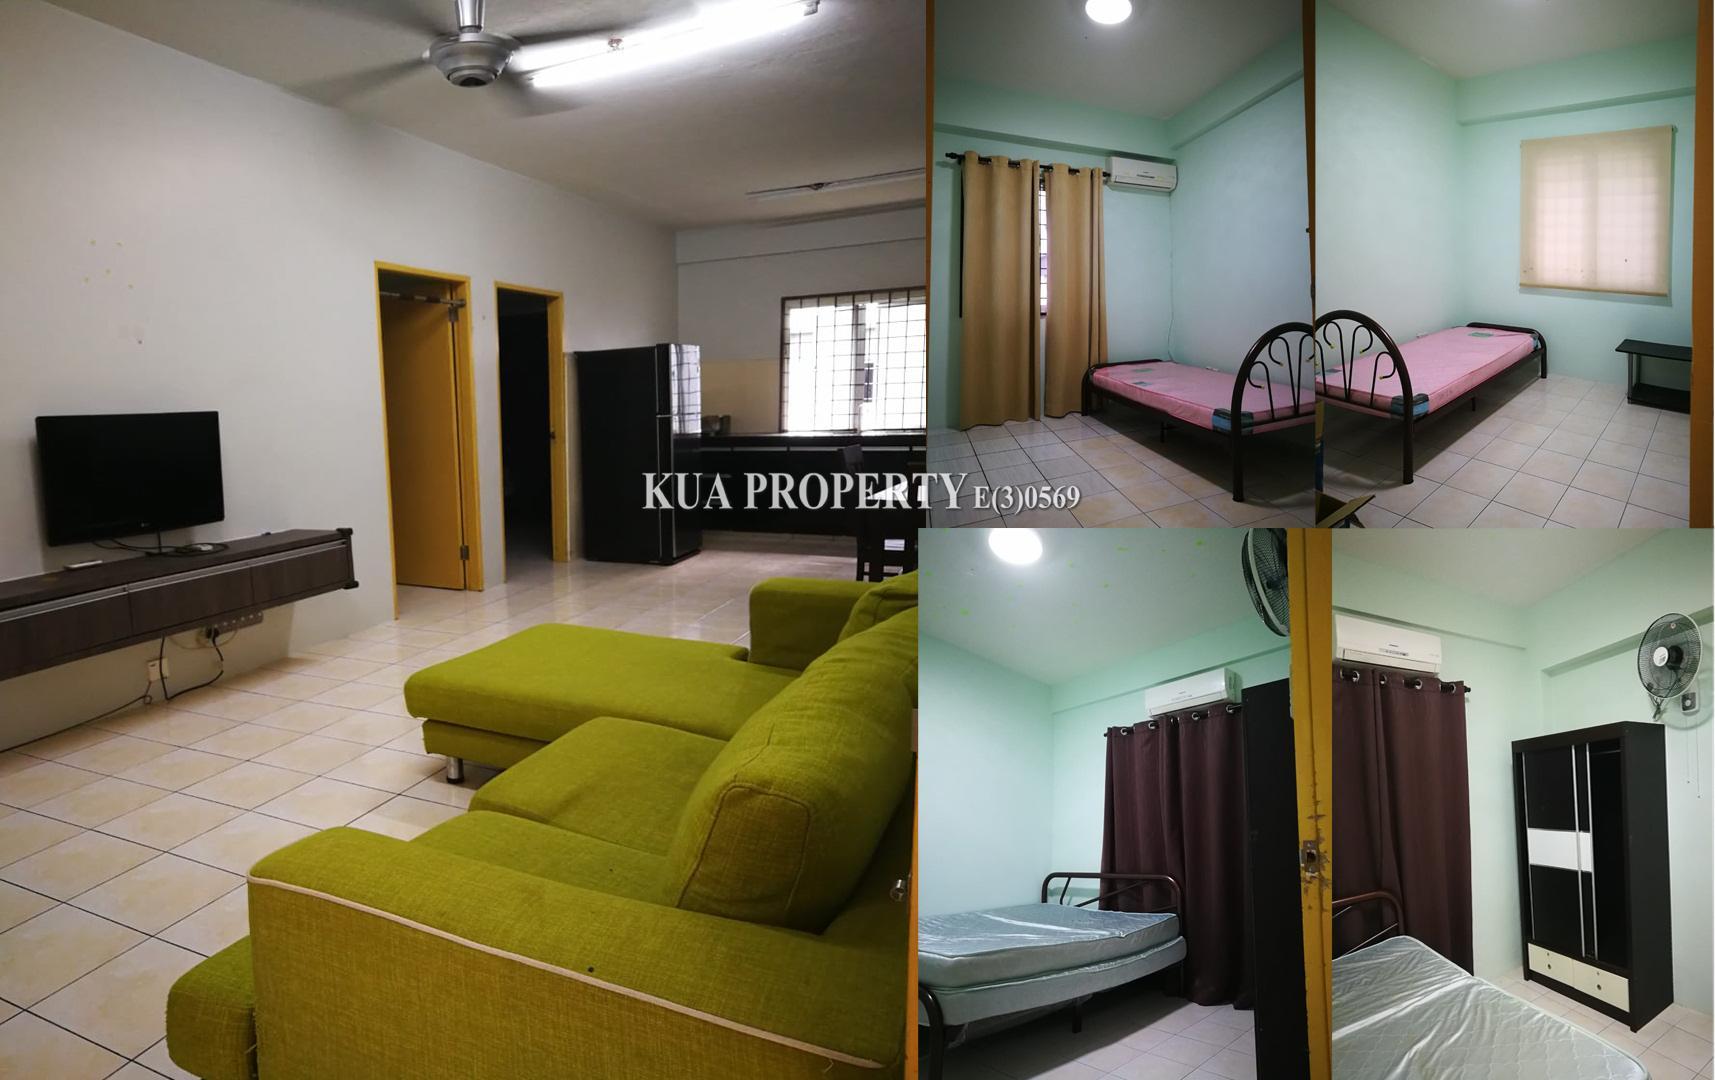 Ground Floor Samajaya Apartment For Rent at Muara Tabuan